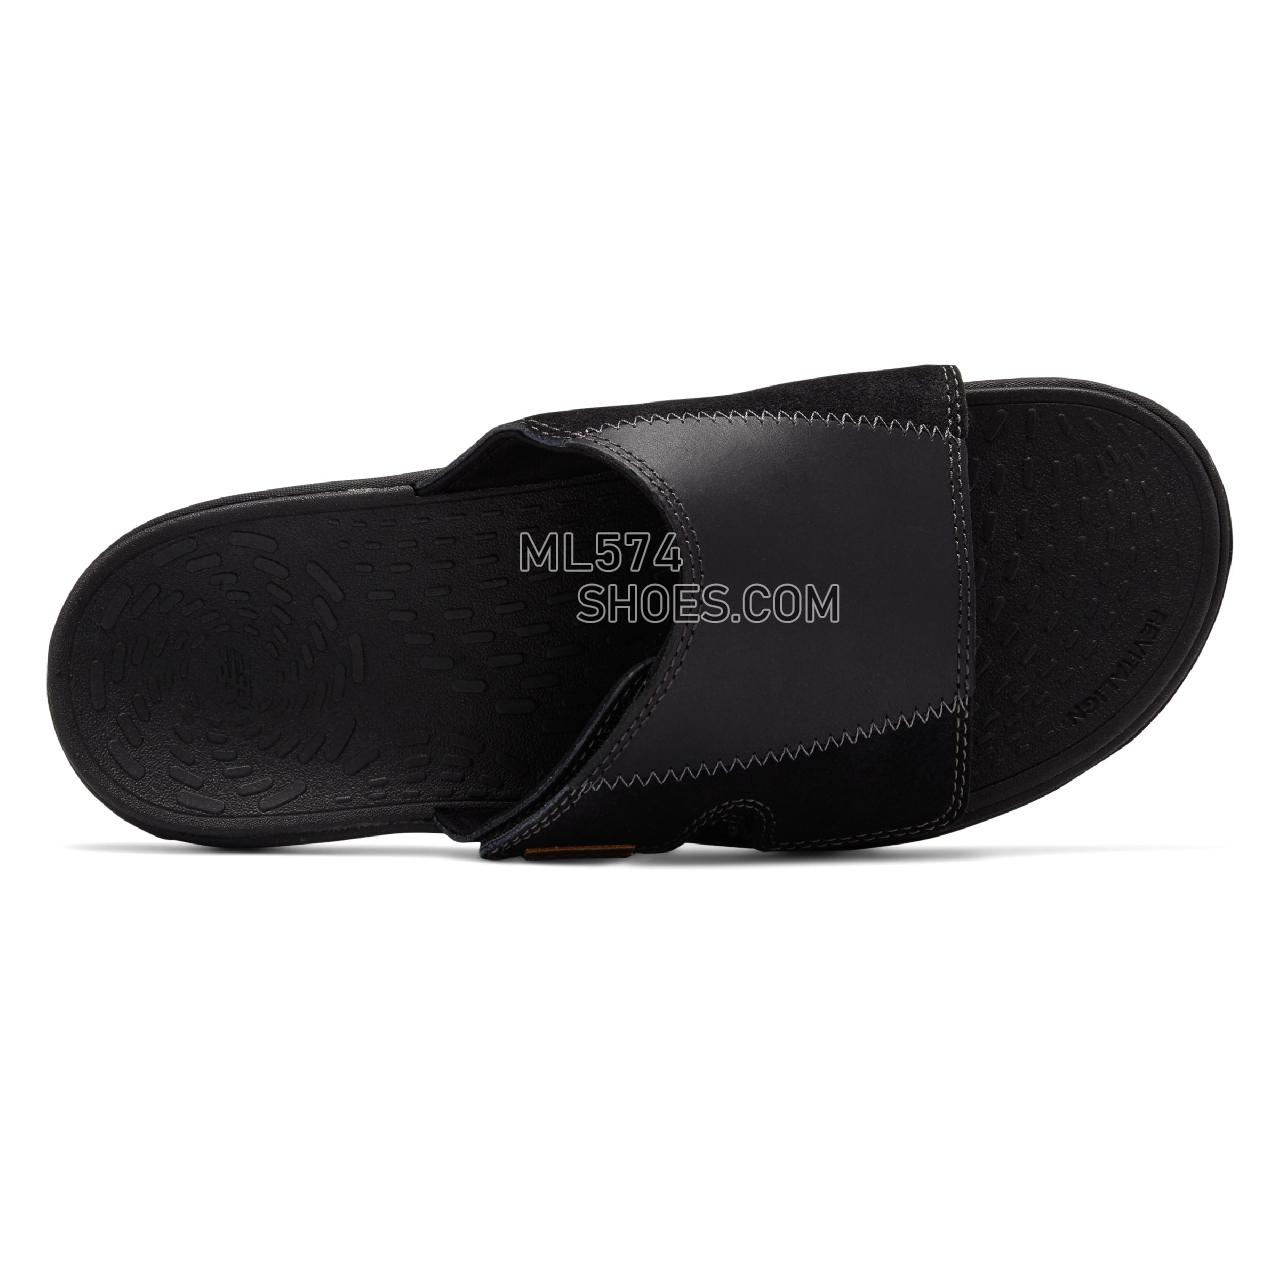 New Balance Quest Slide - Men's 3100 - Sandals Black - MR3100BK